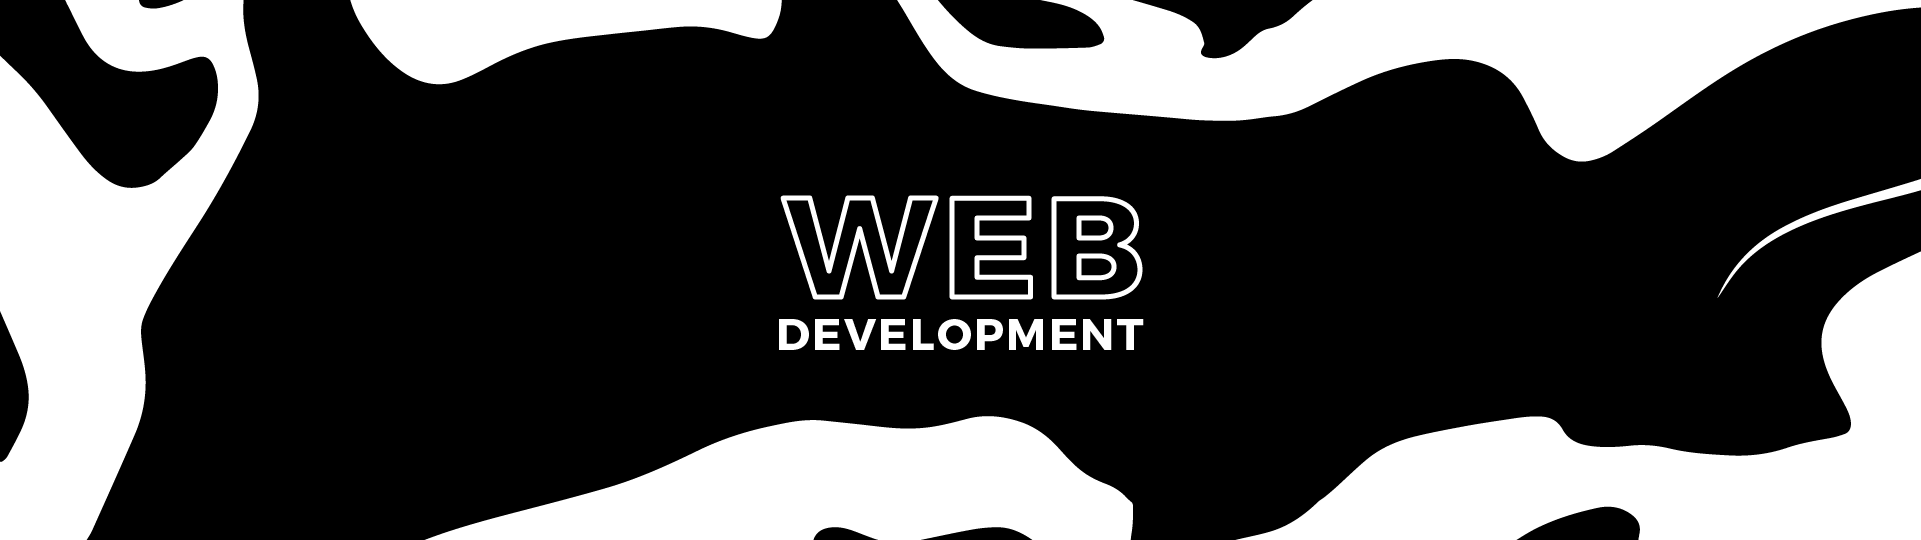 web dev and design